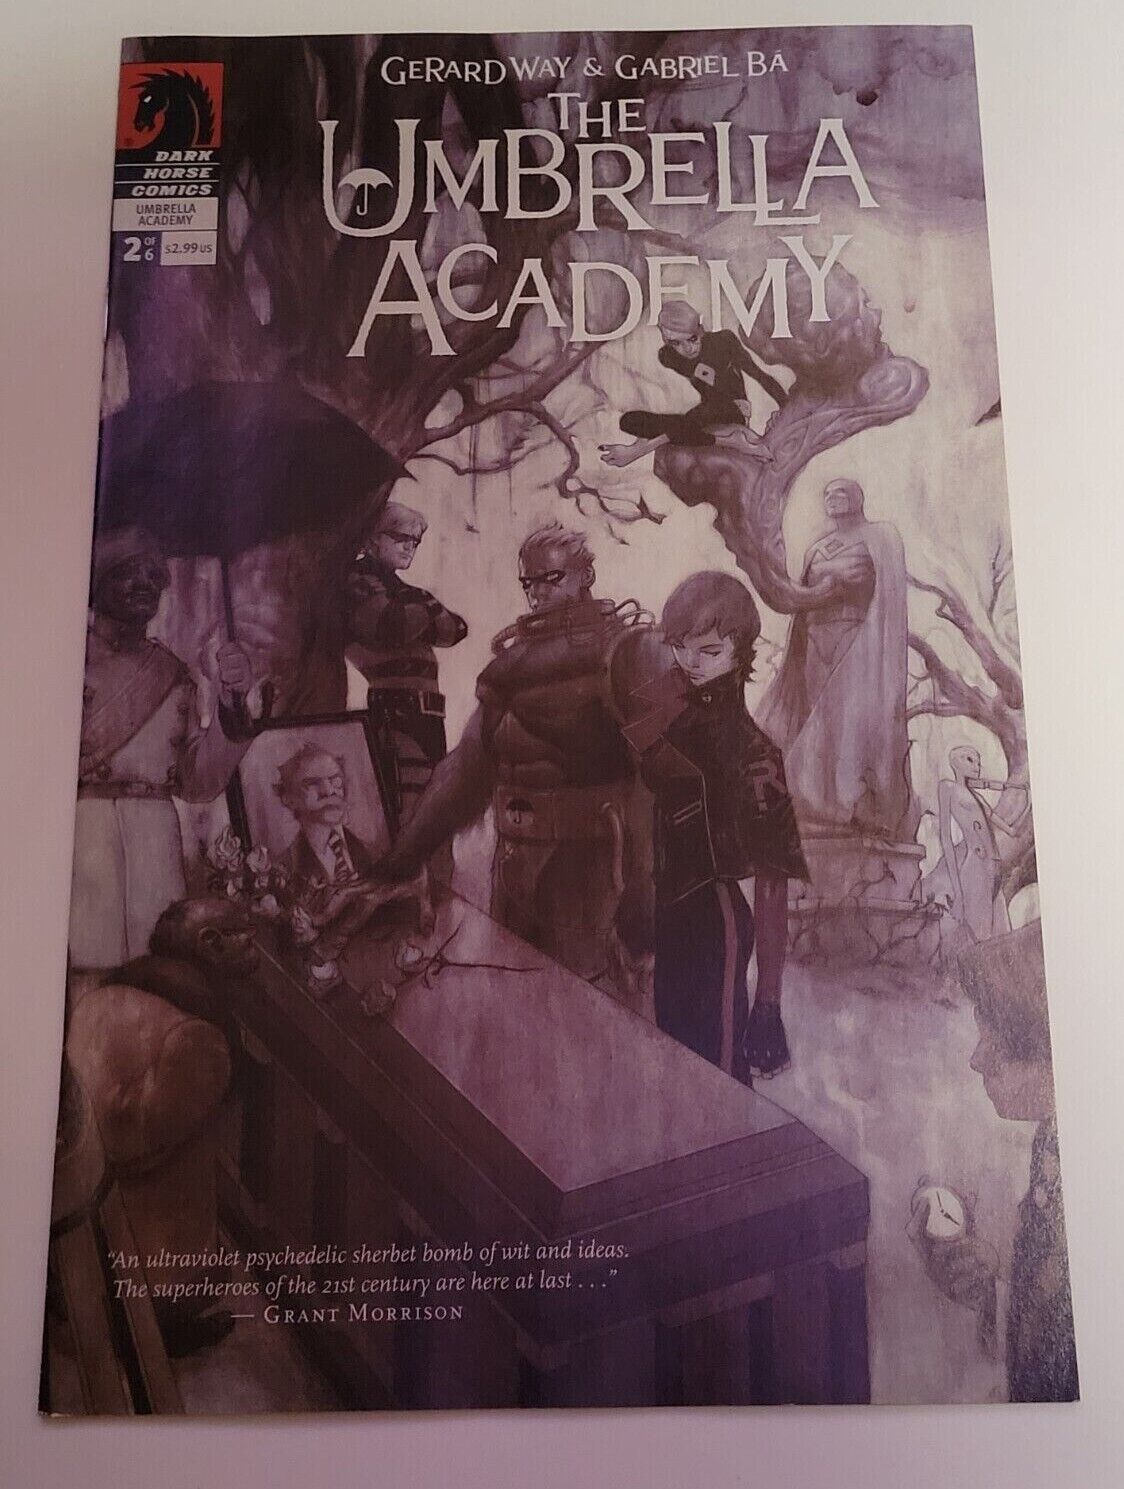 The Umbrella Academy - Five Issues - #2 #3 #4 #5 #6  1st Prints  2007 Way & Ba